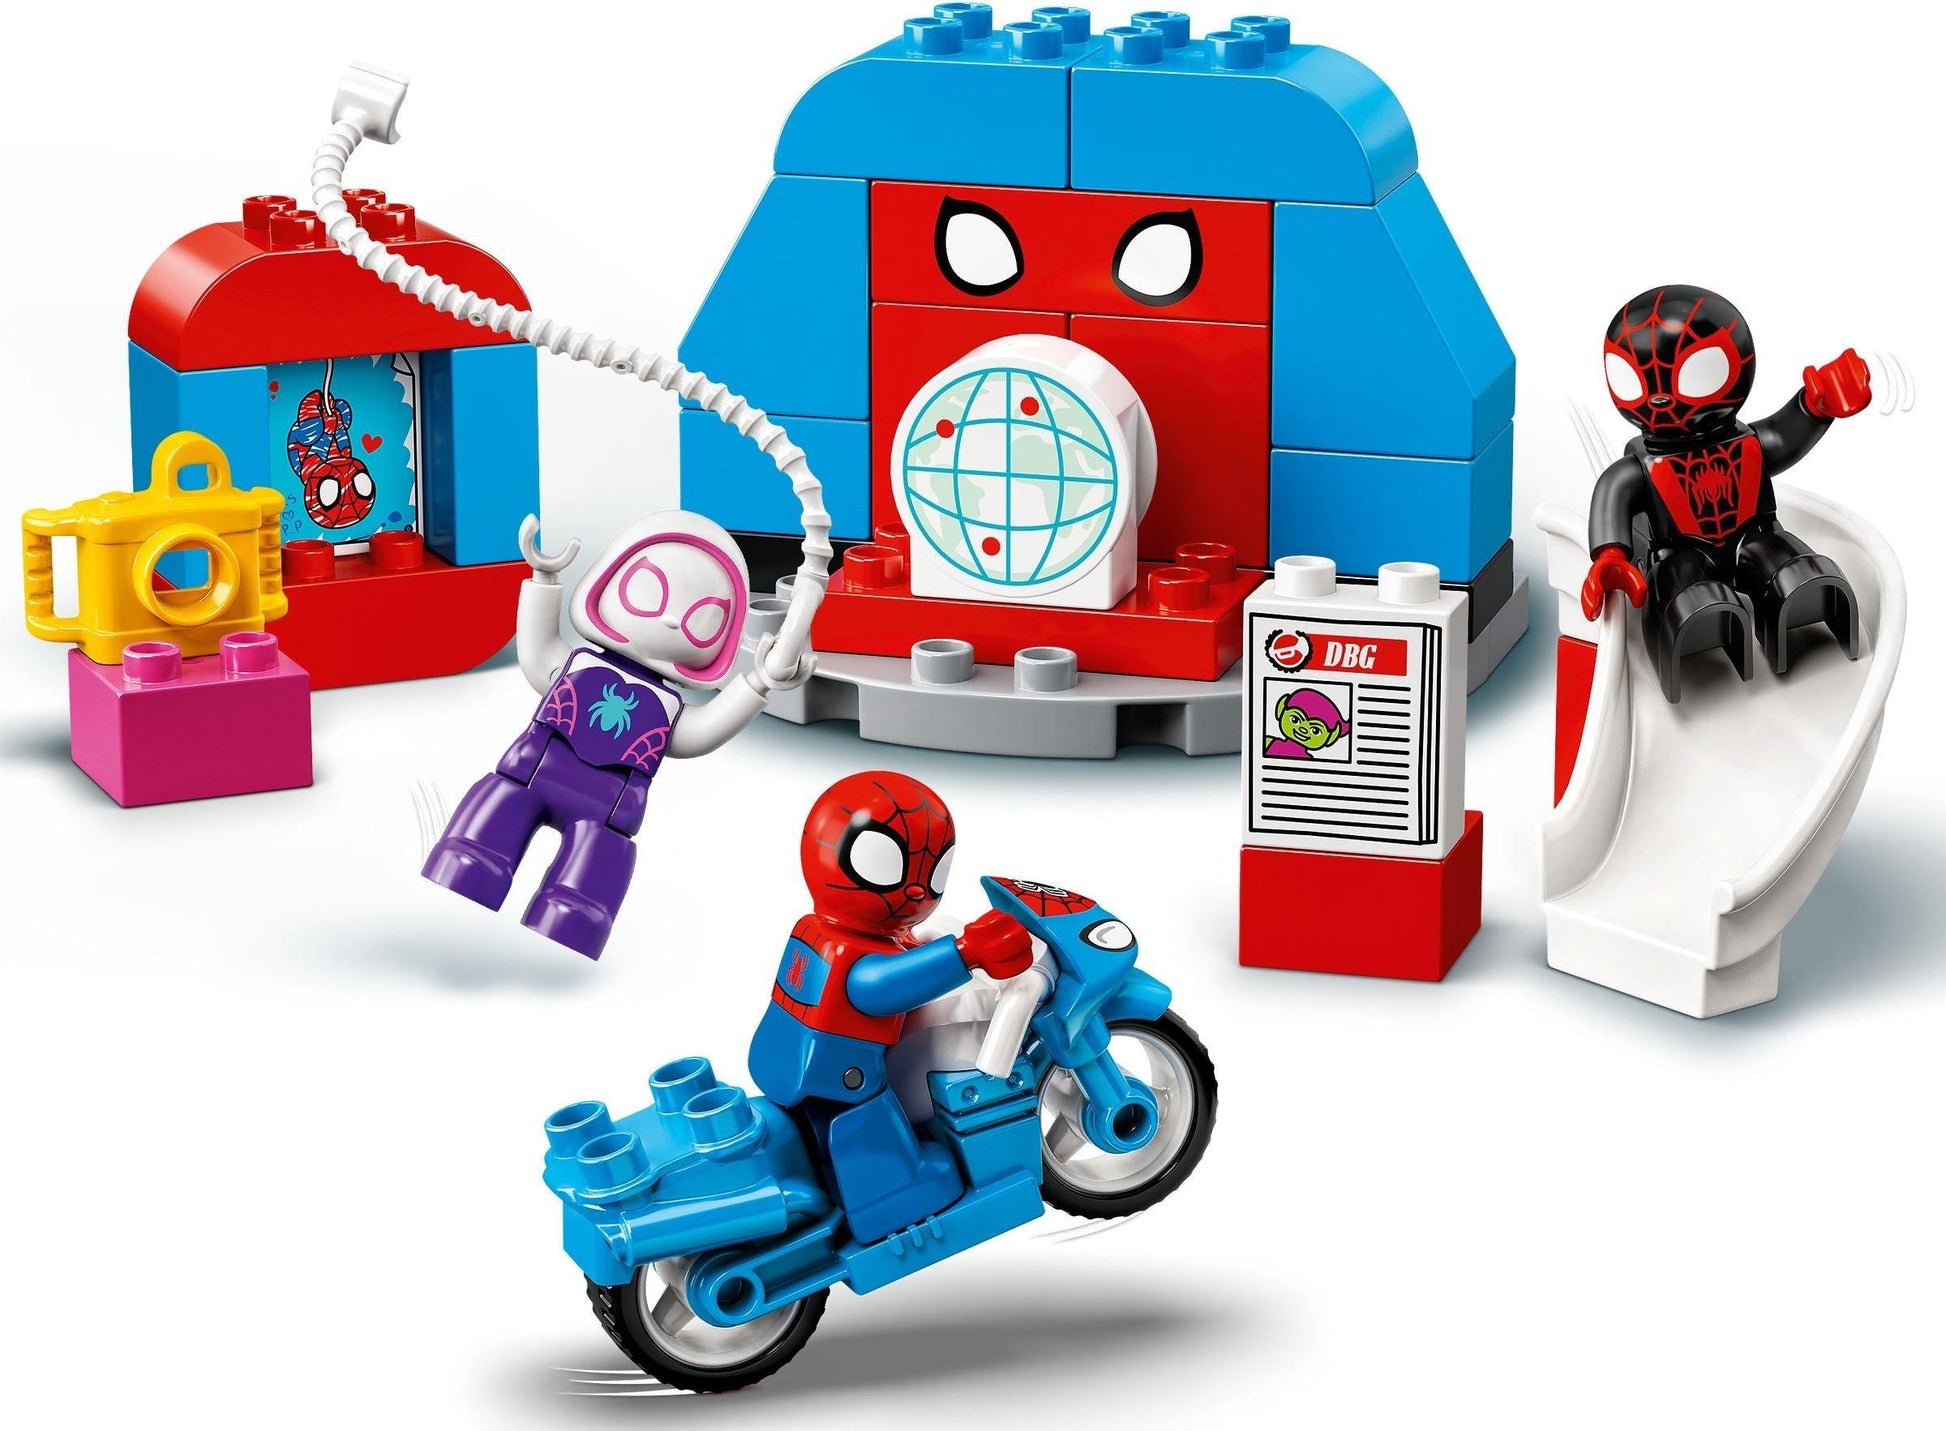 LEGO Spider Man hoofdkwartier 10940 DUPLO | 2TTOYS ✓ Official shop<br>